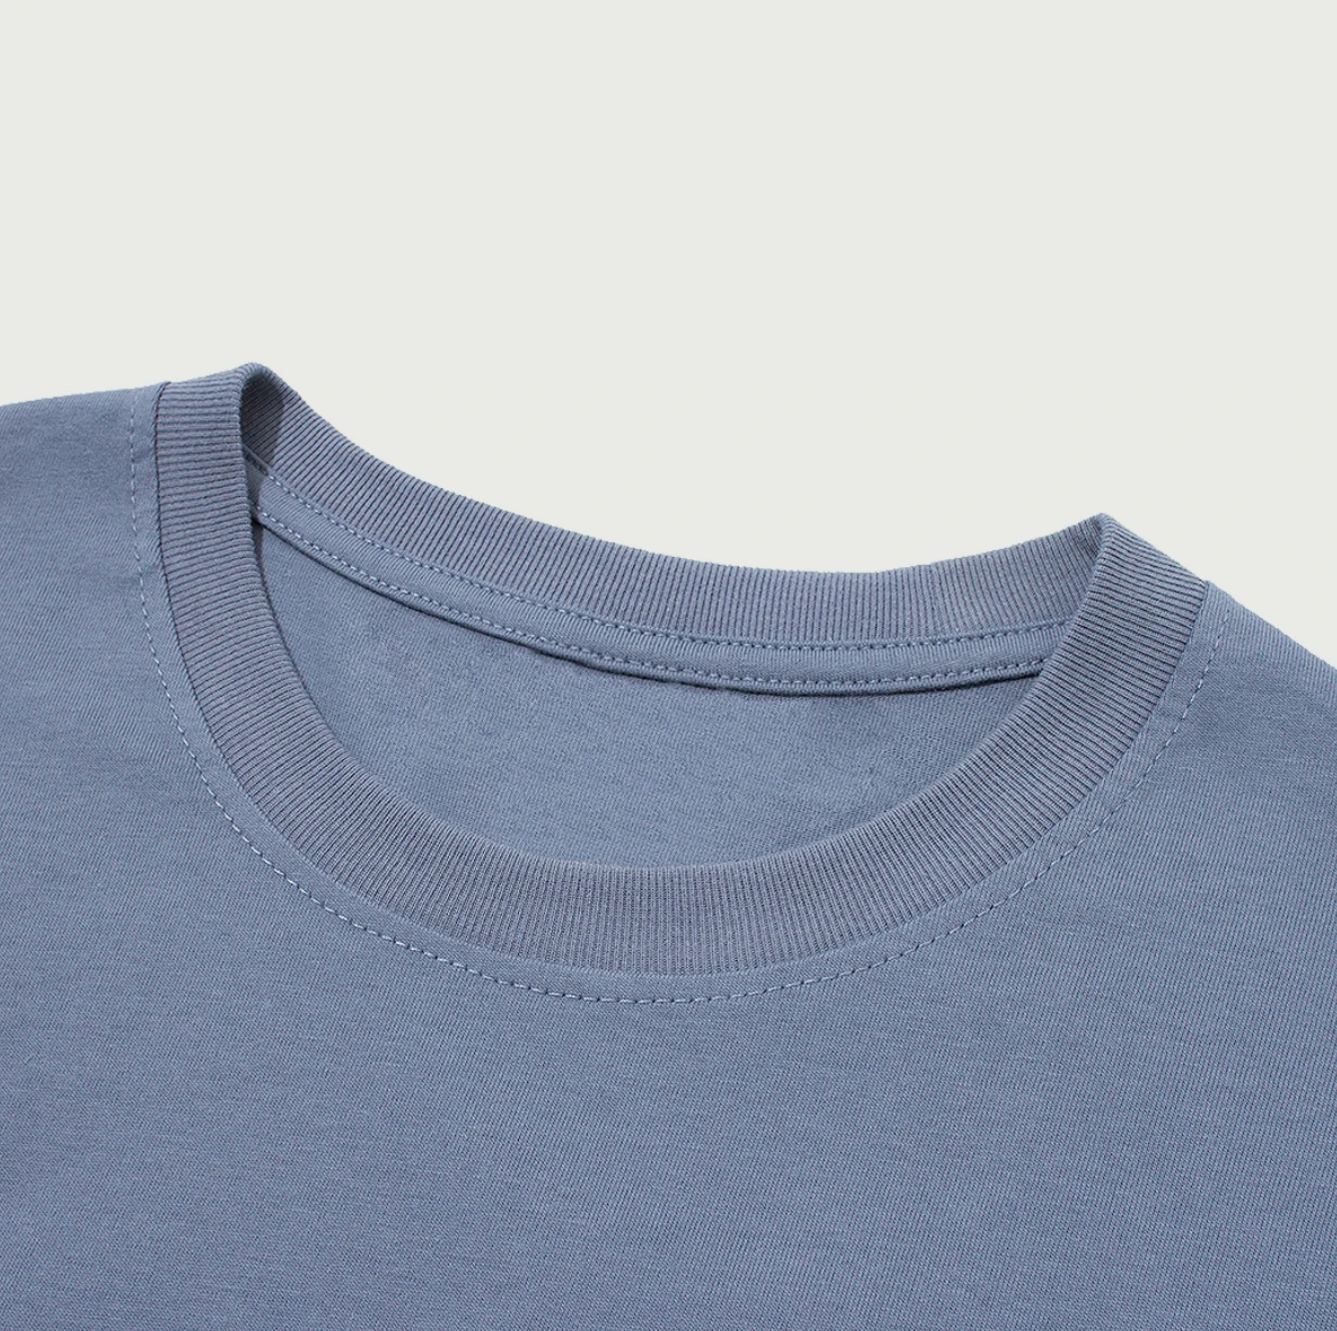 RAVEBOUND (BACK PRINT) - Unisex Loose T-shirt